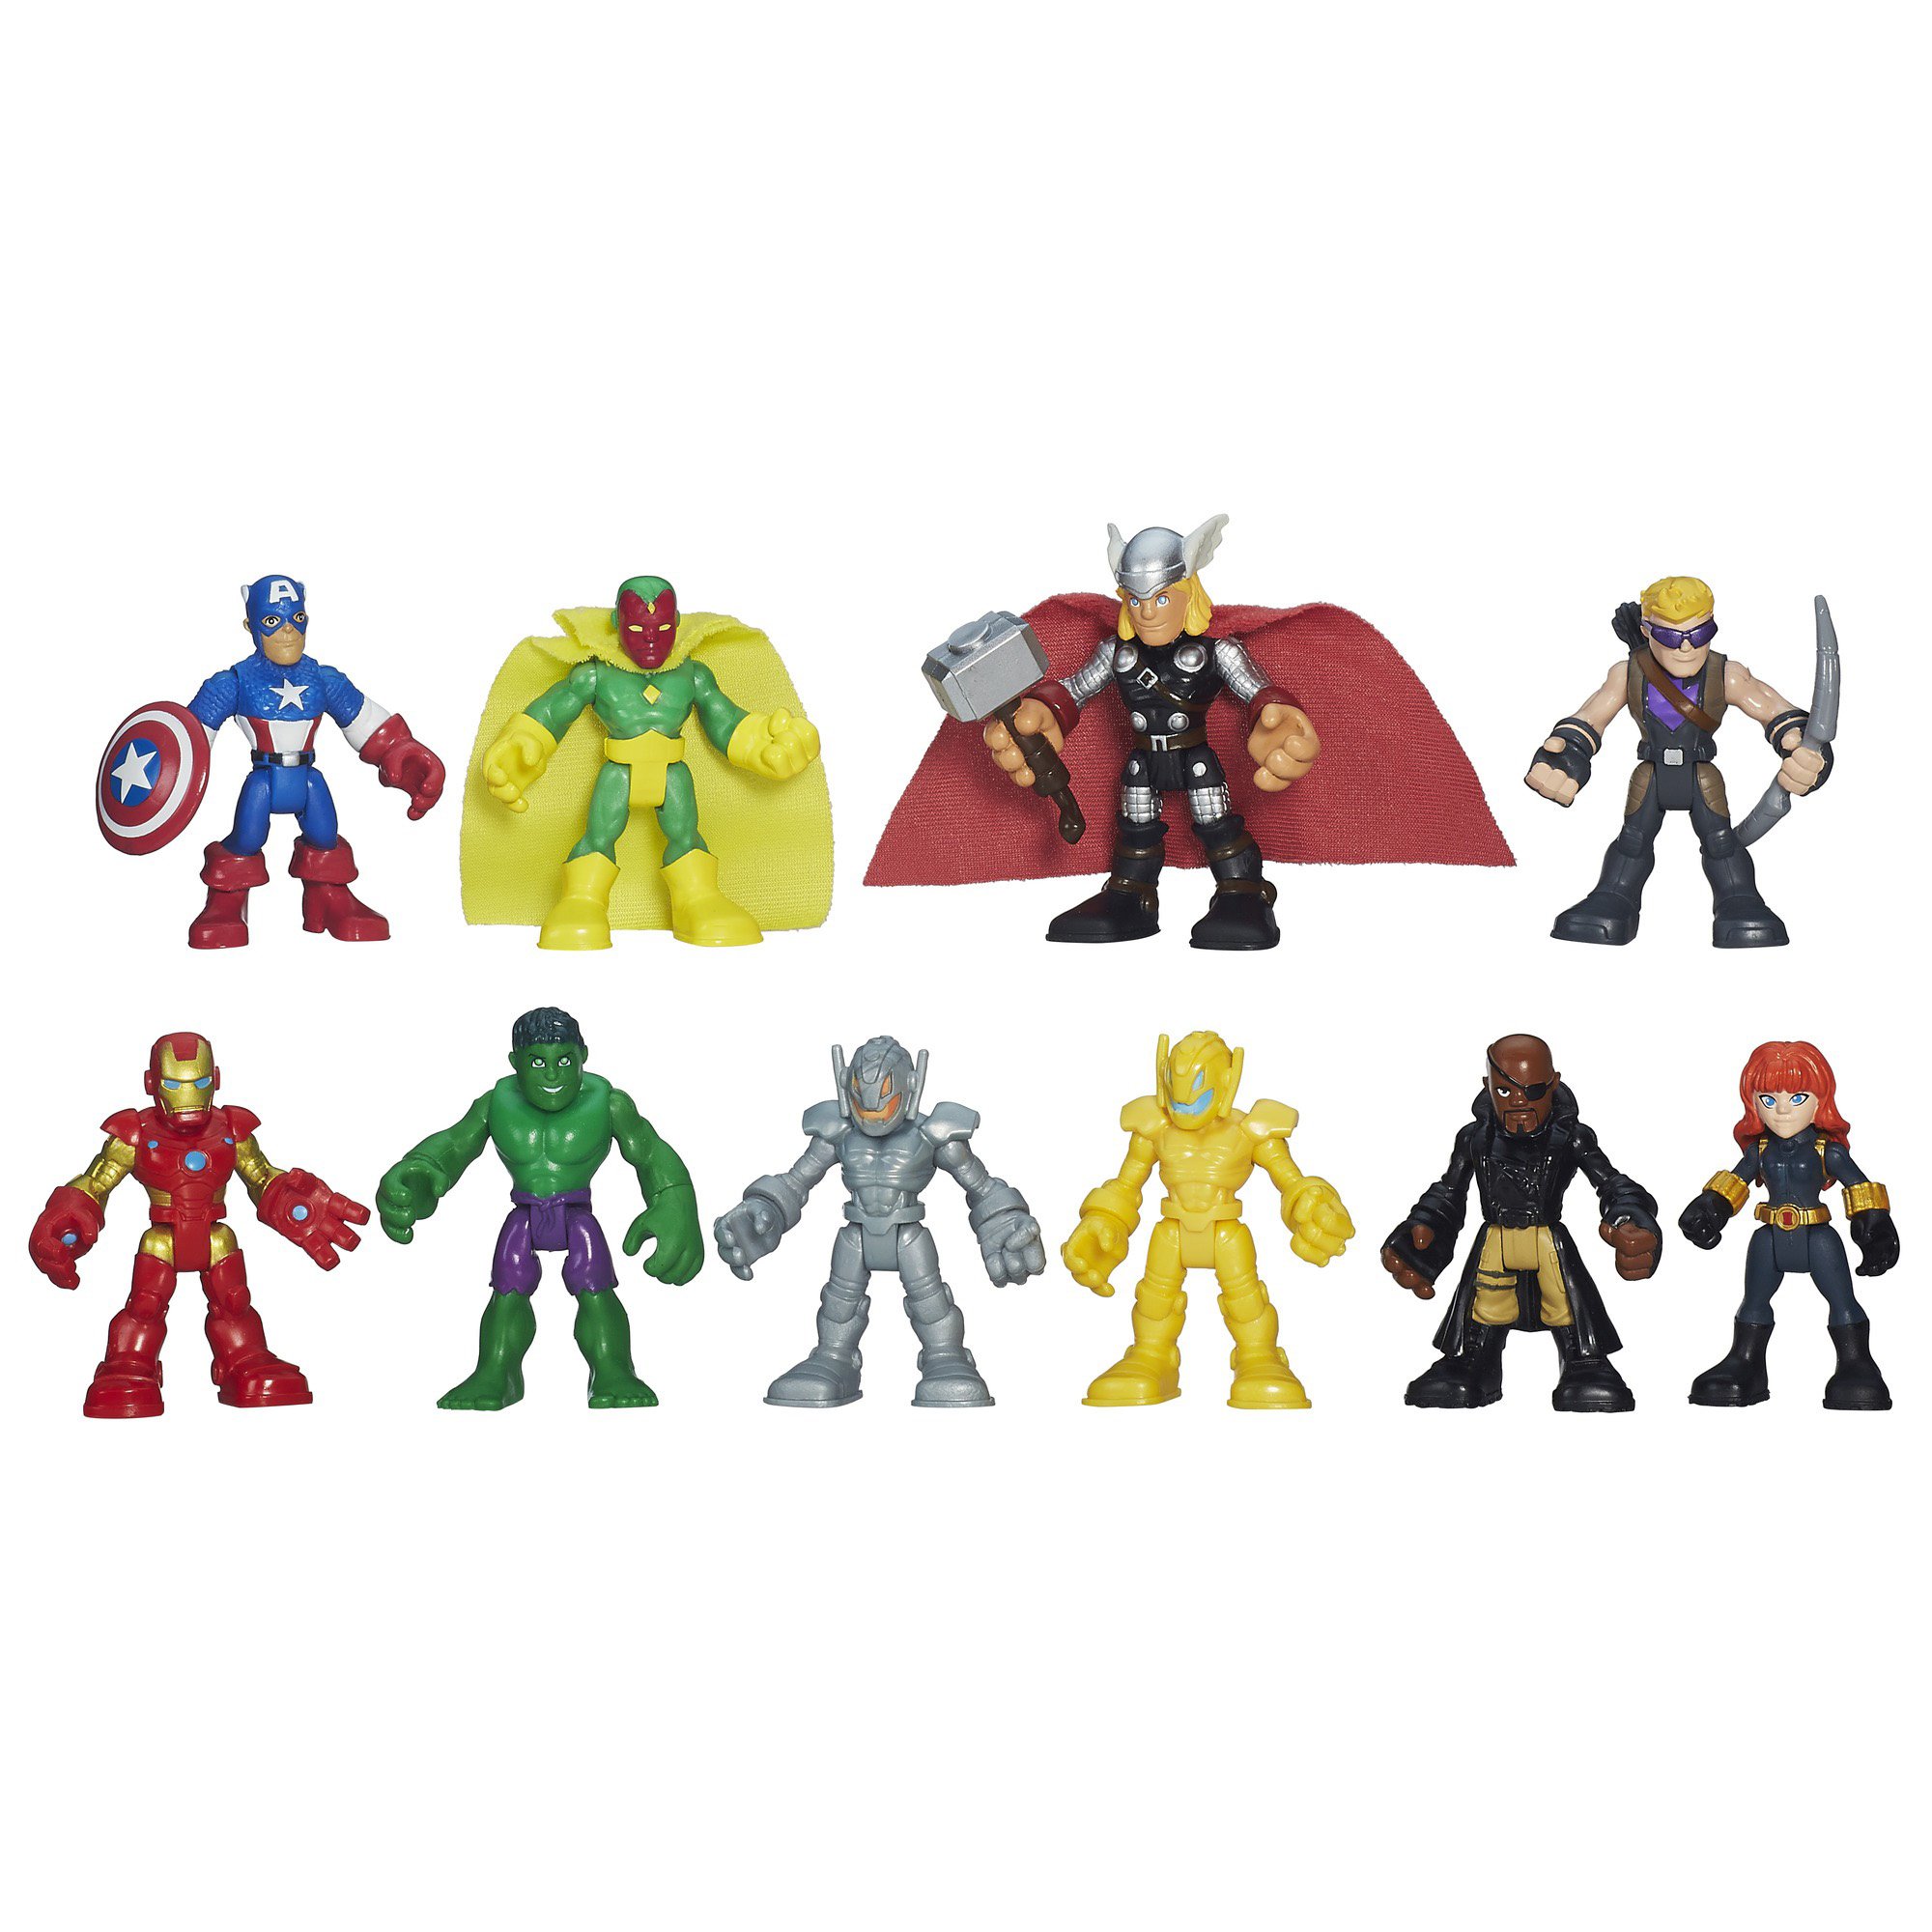 10-Figure 2.5" Playskool Heroes Marvel Super Hero Adventures Ultimate Action Figure Set $13 + Free Shipping w/ Prime or on $35+